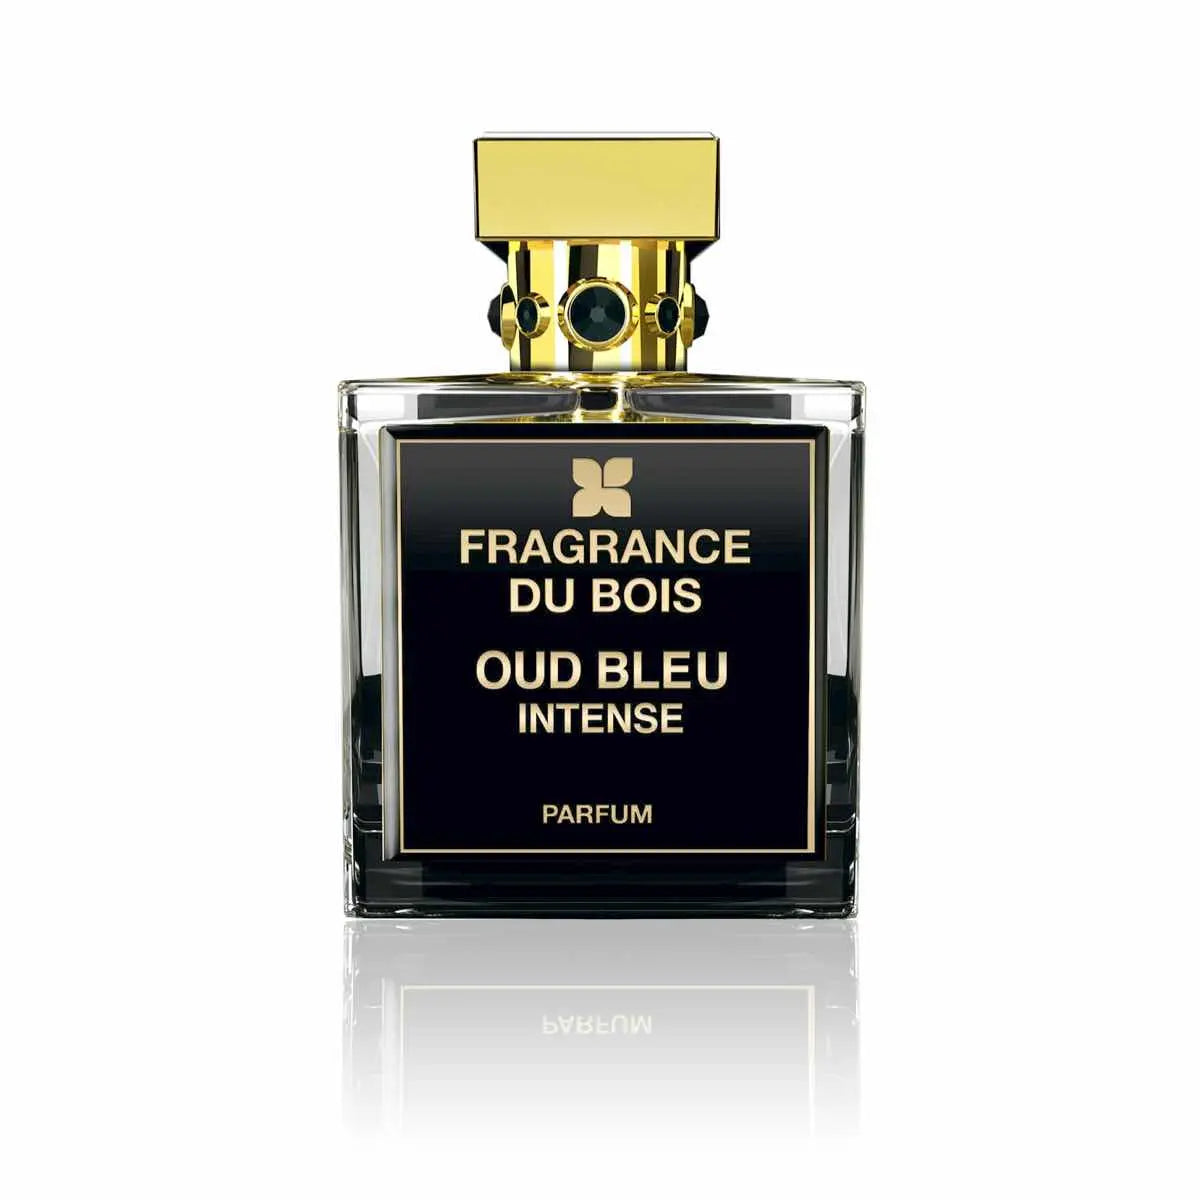 Fragrance du bois Oud Bleu Intense perfume - 100 ml